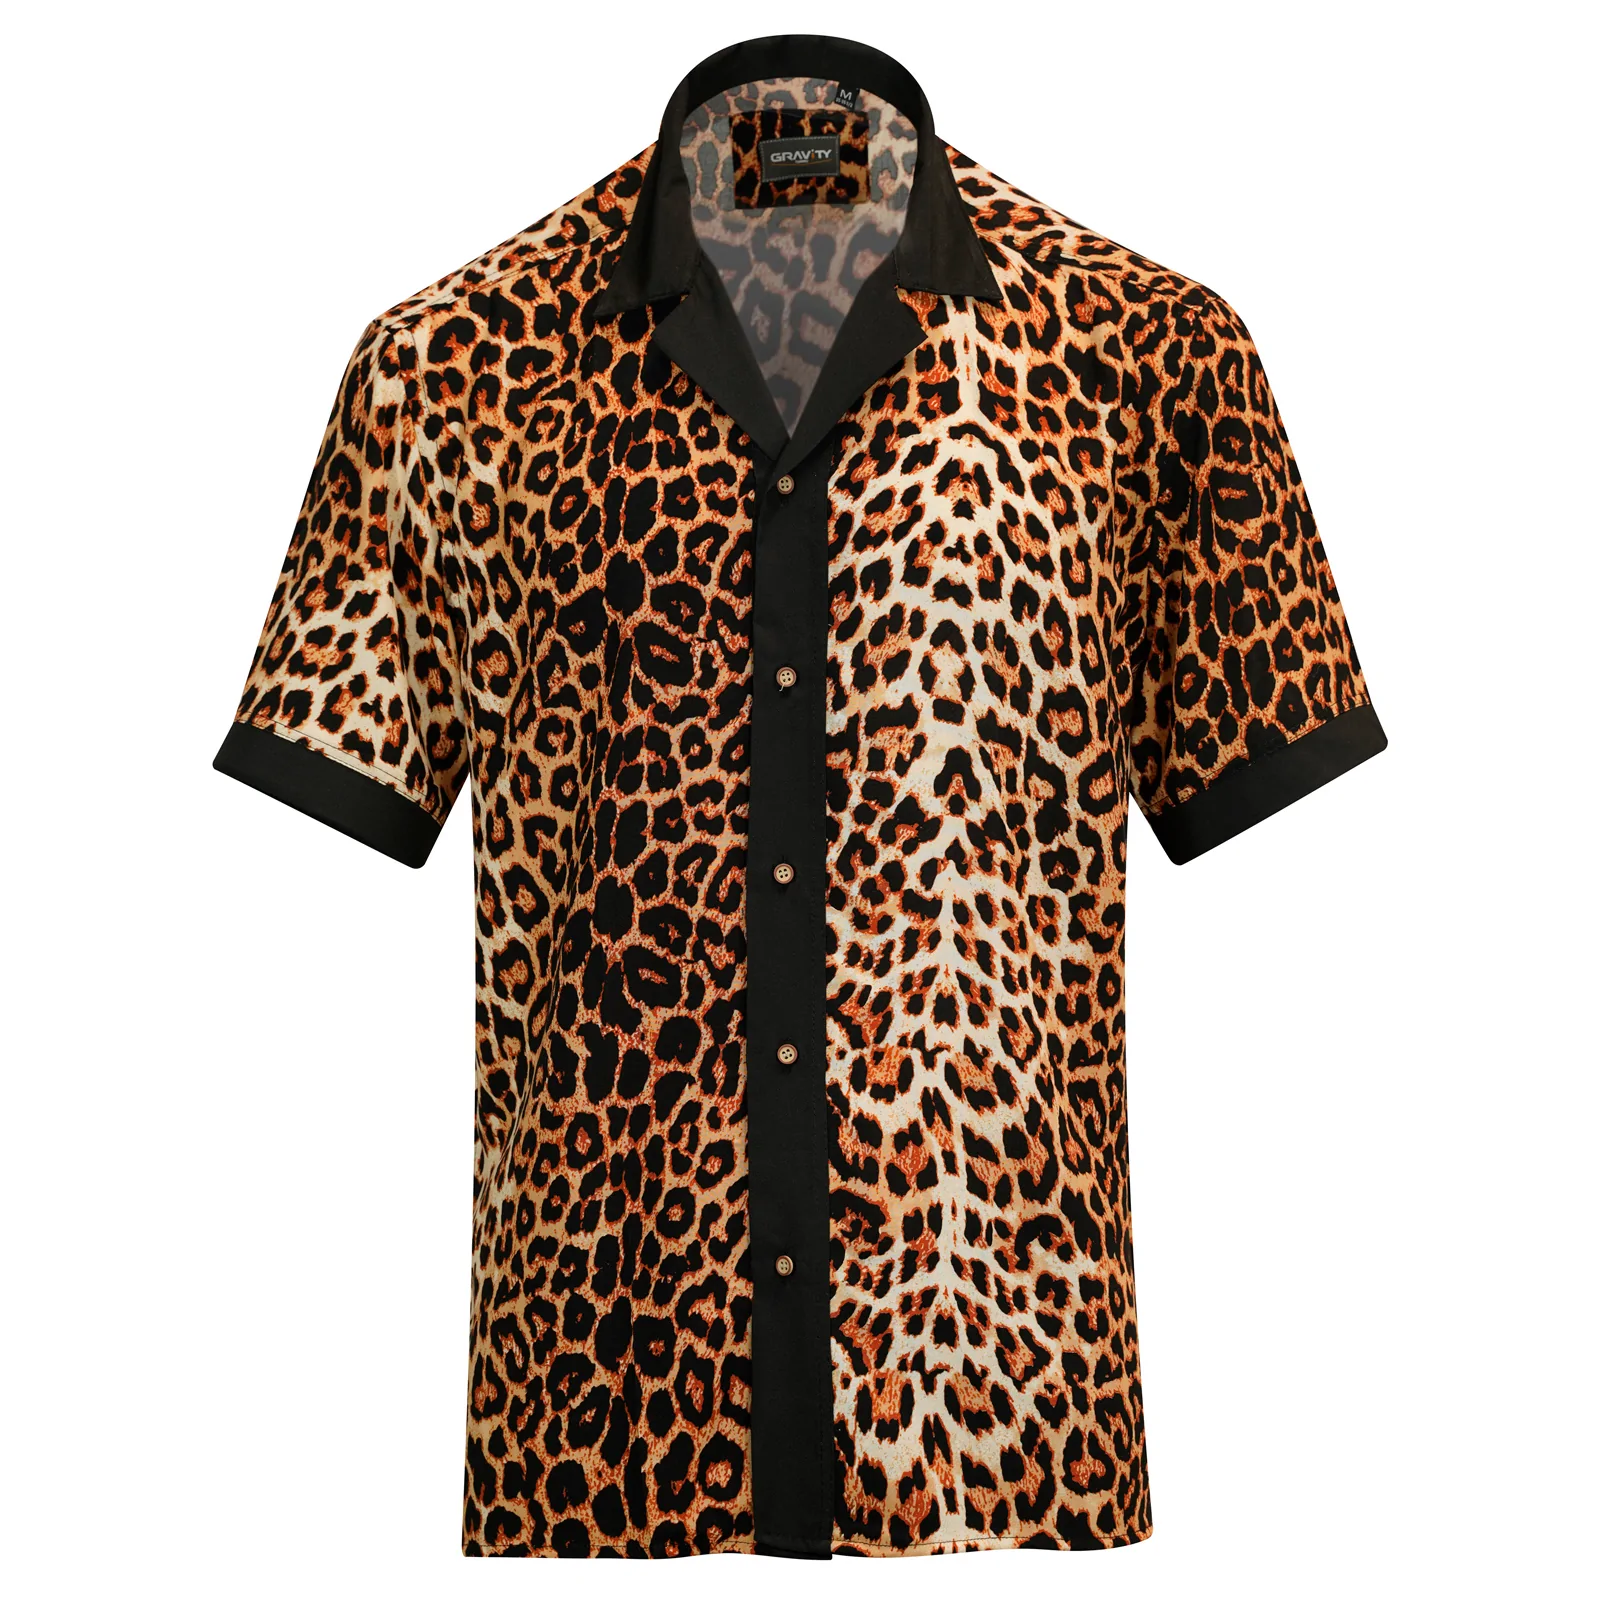 Men's Weekend Shirt | Classic Leopard | Simply The Best